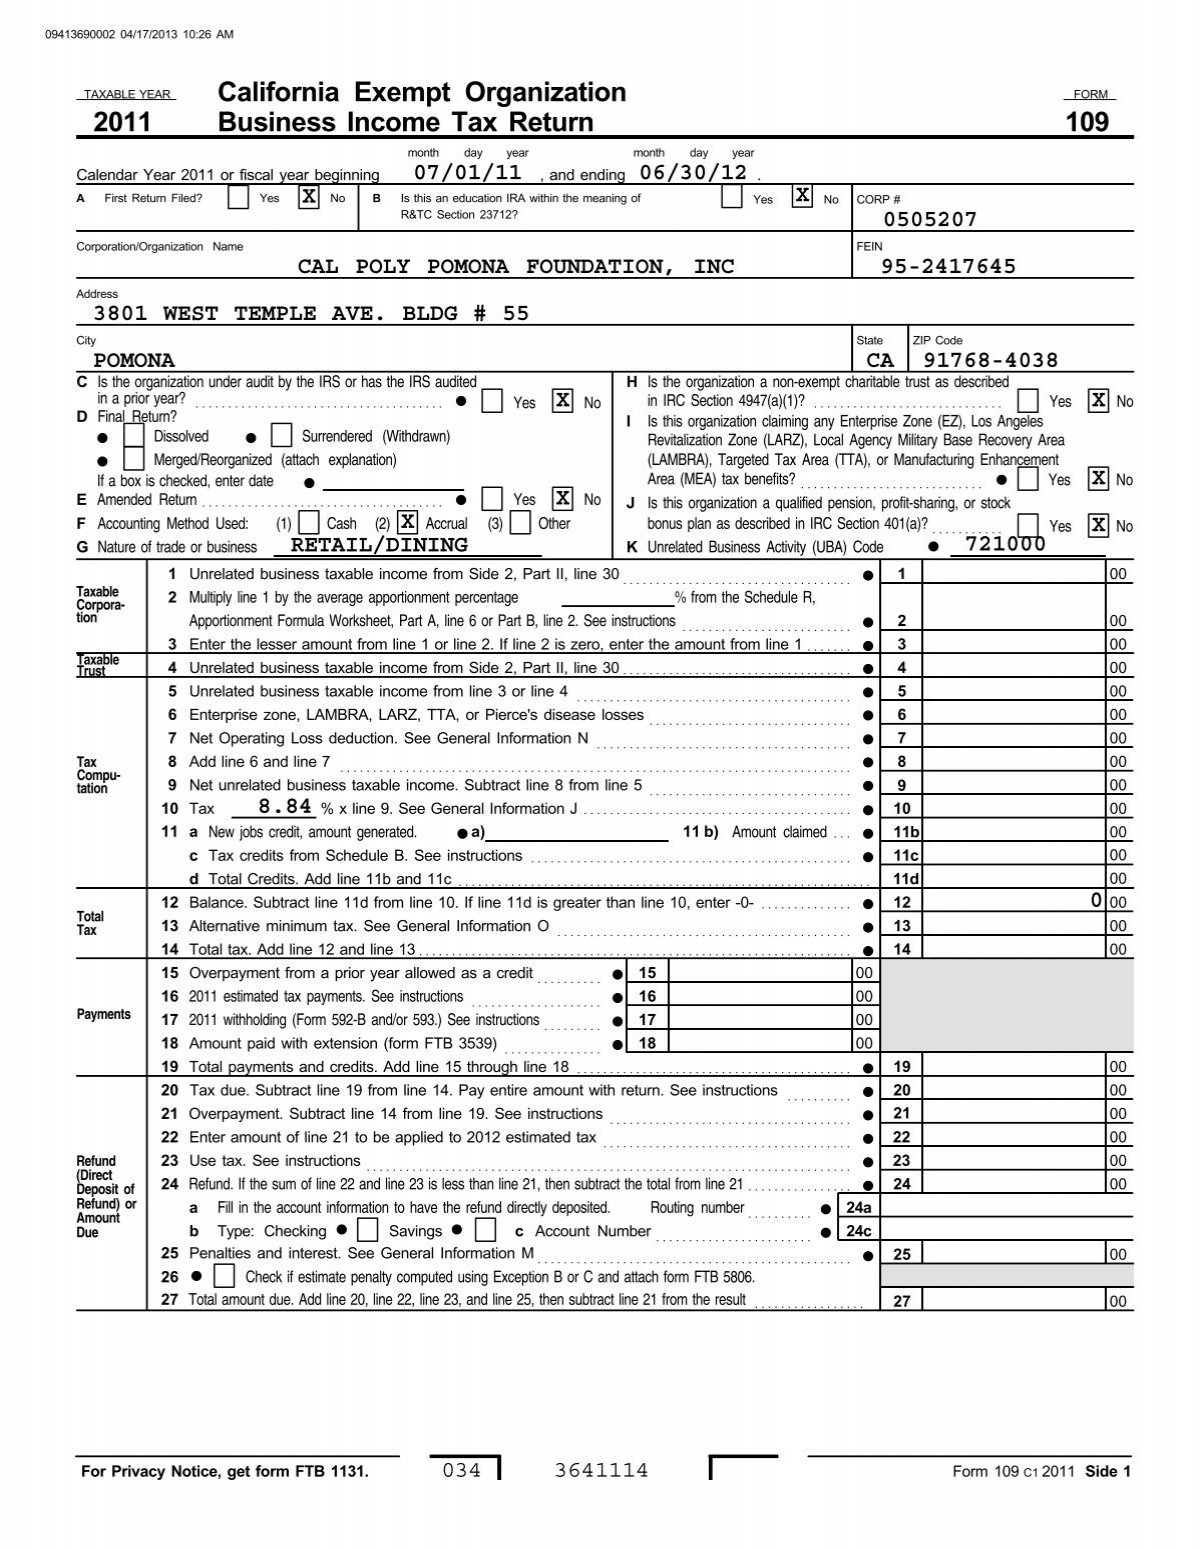 ca-exempt-organization-business-income-tax-return-form-109